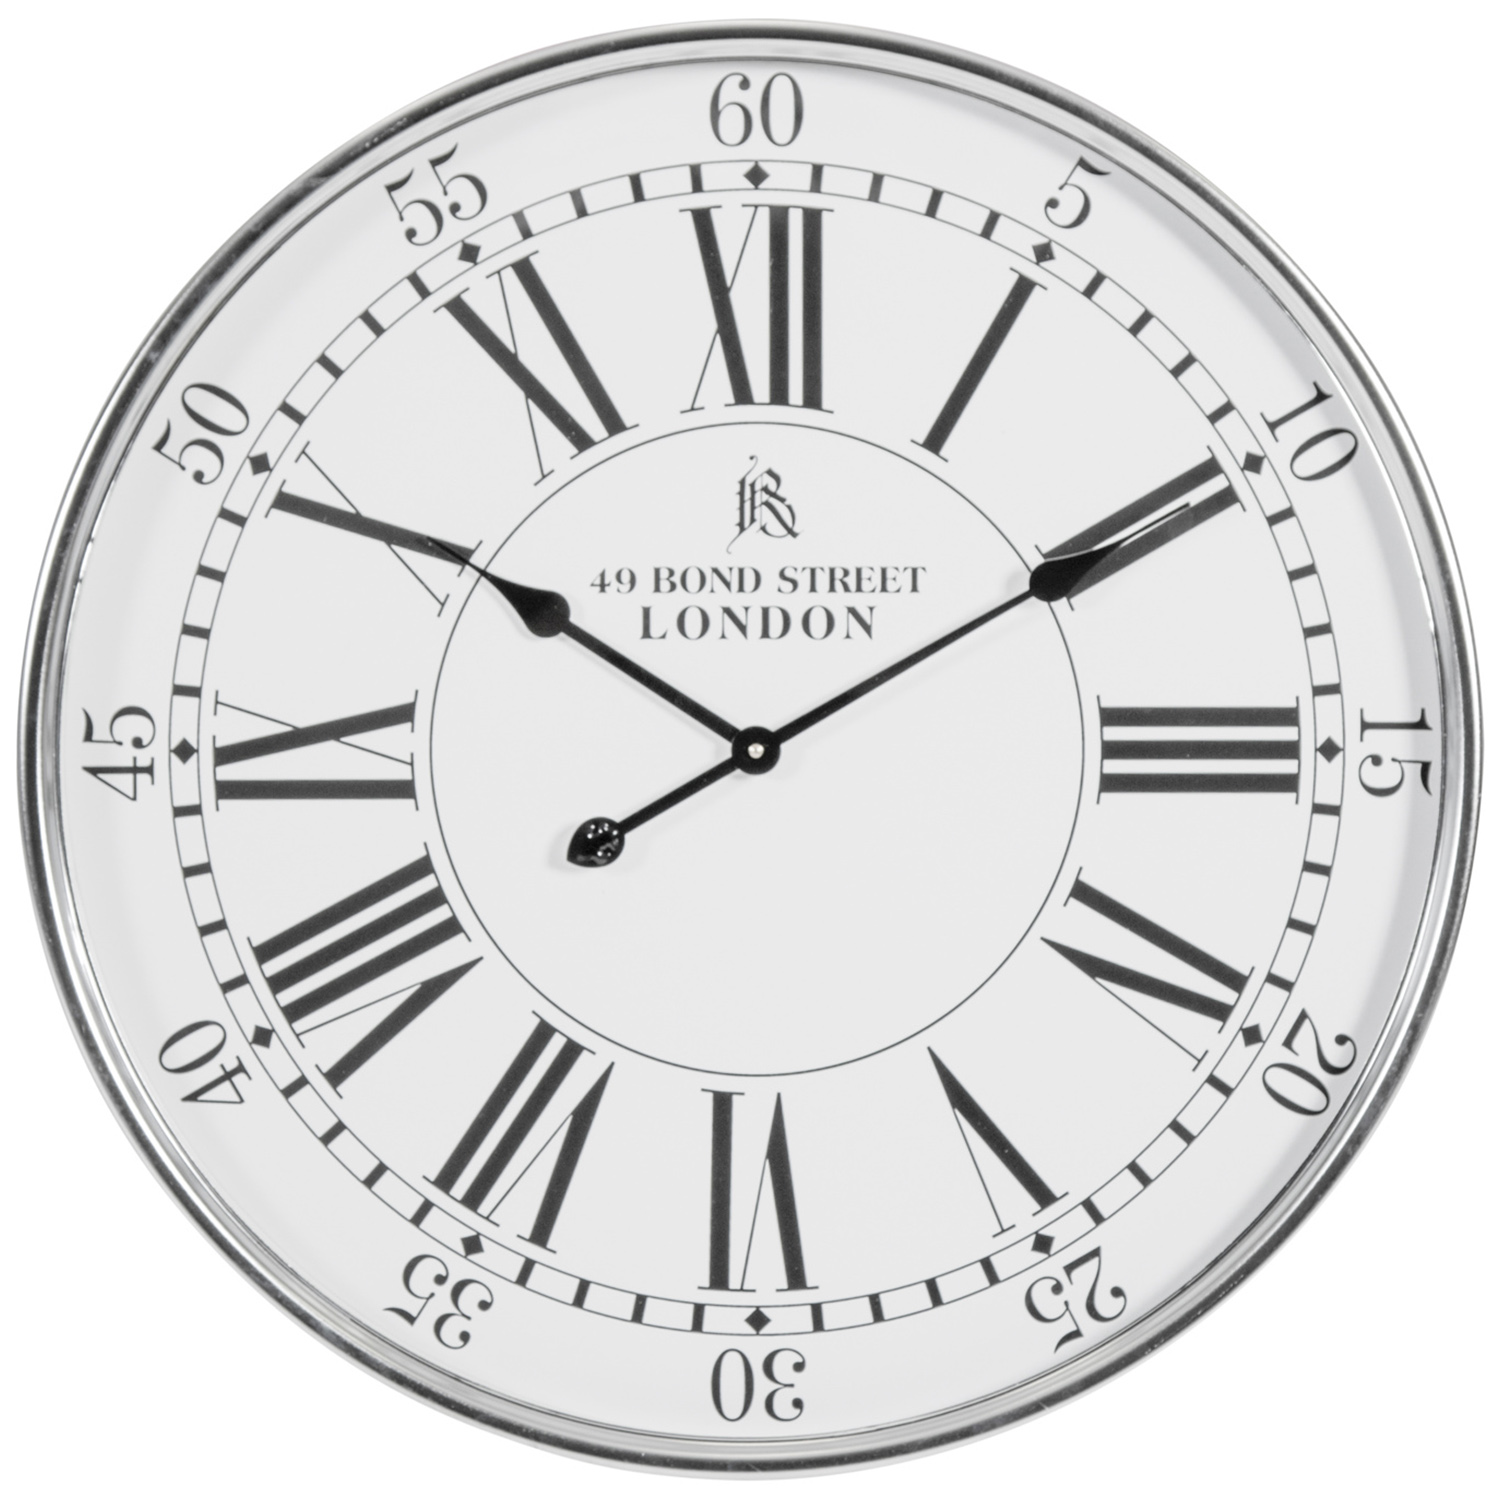 Silver 49 Bond Street London Wall Clock Image